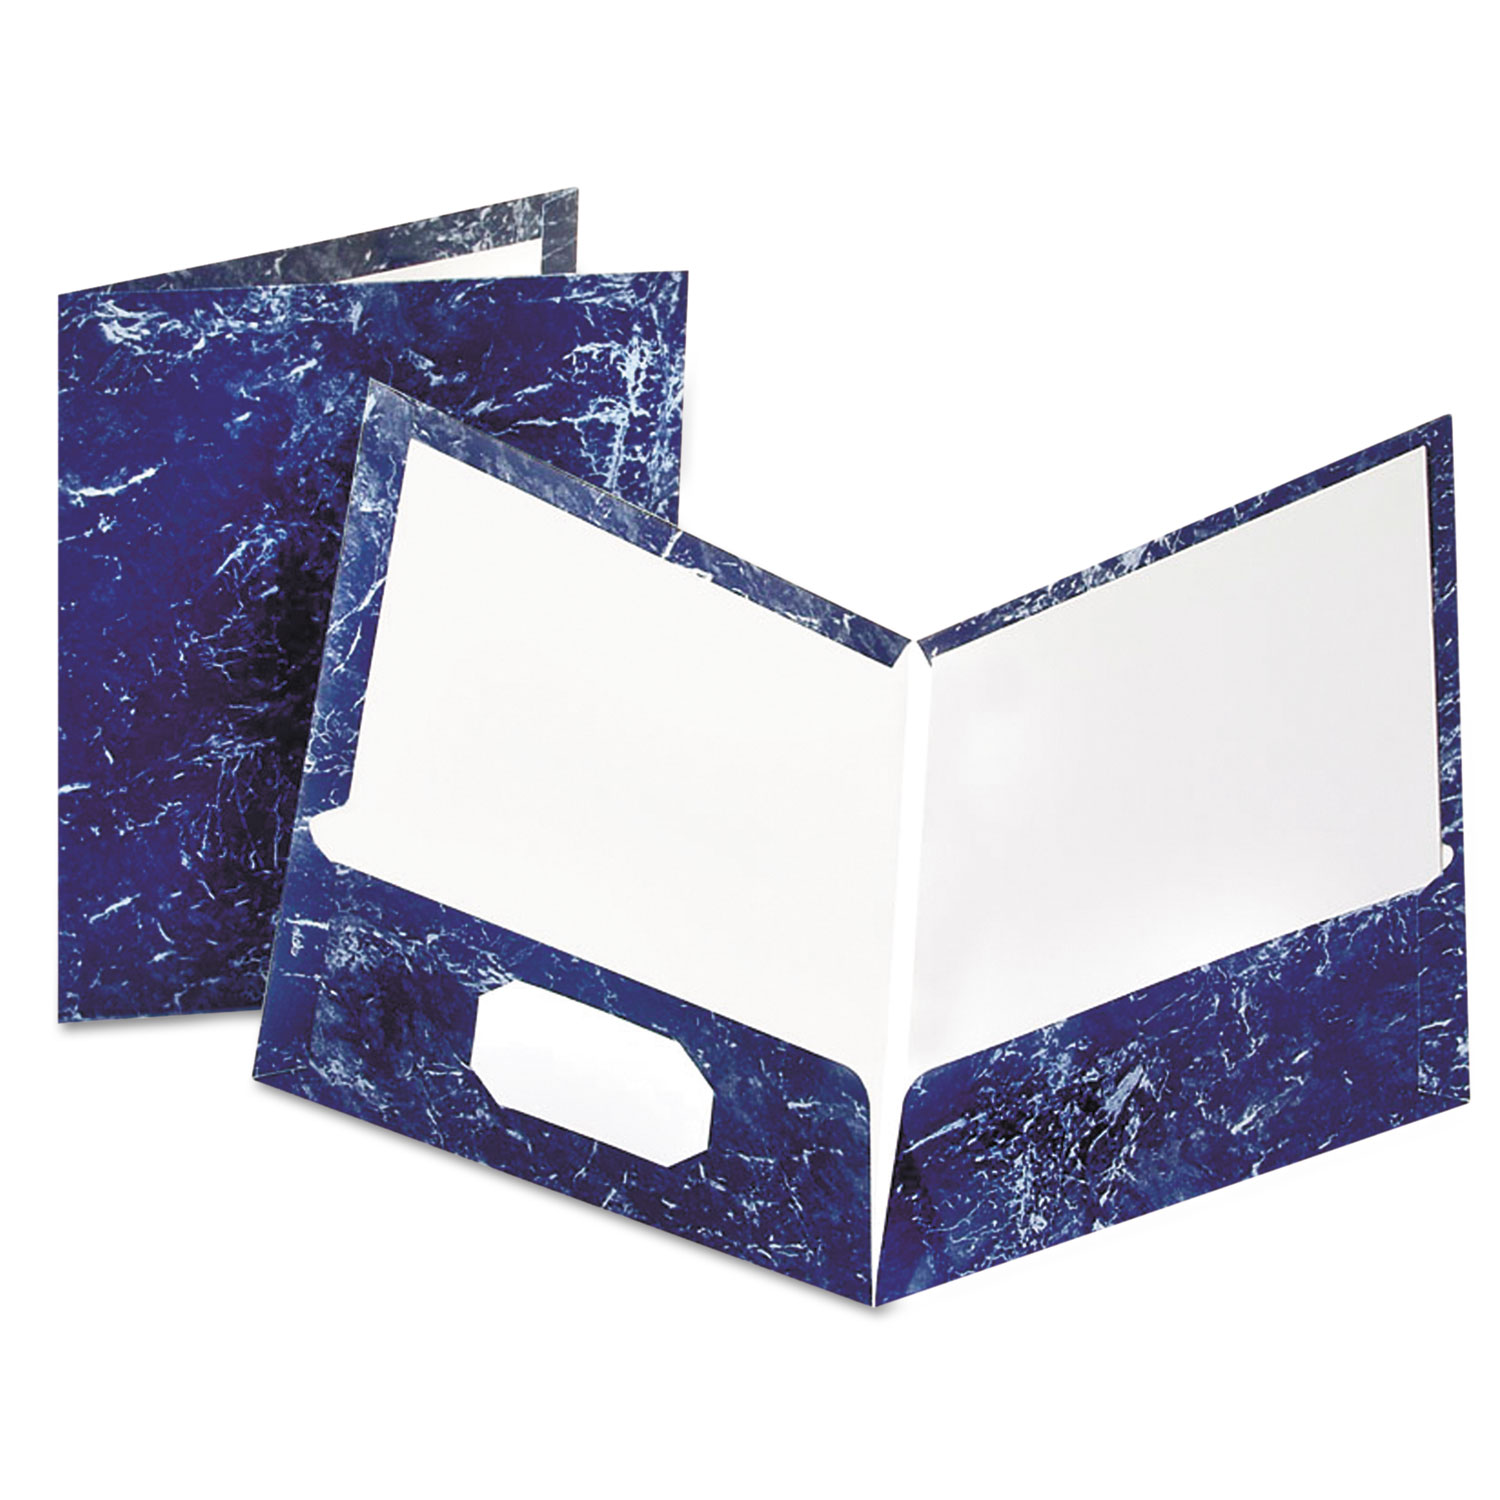  Oxford 51643 Marble Design Laminated High Gloss Twin Pocket Folder,Navy, 25/box (OXF51643) 